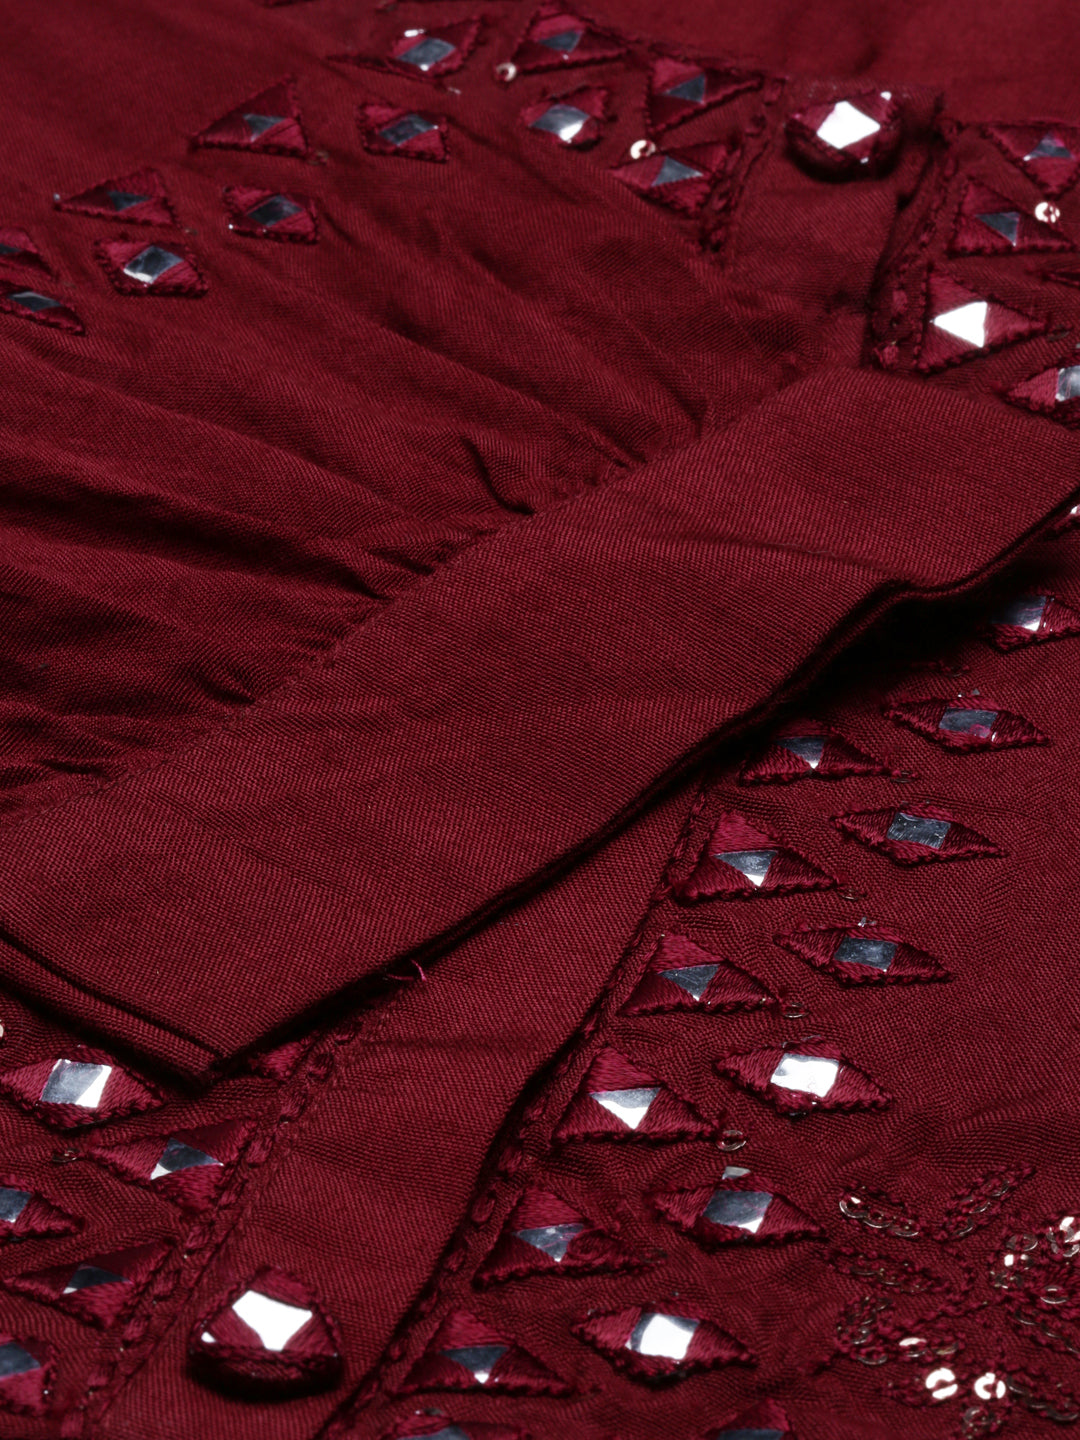 Neeru's Maroon Color Santoon Fabric Tunic